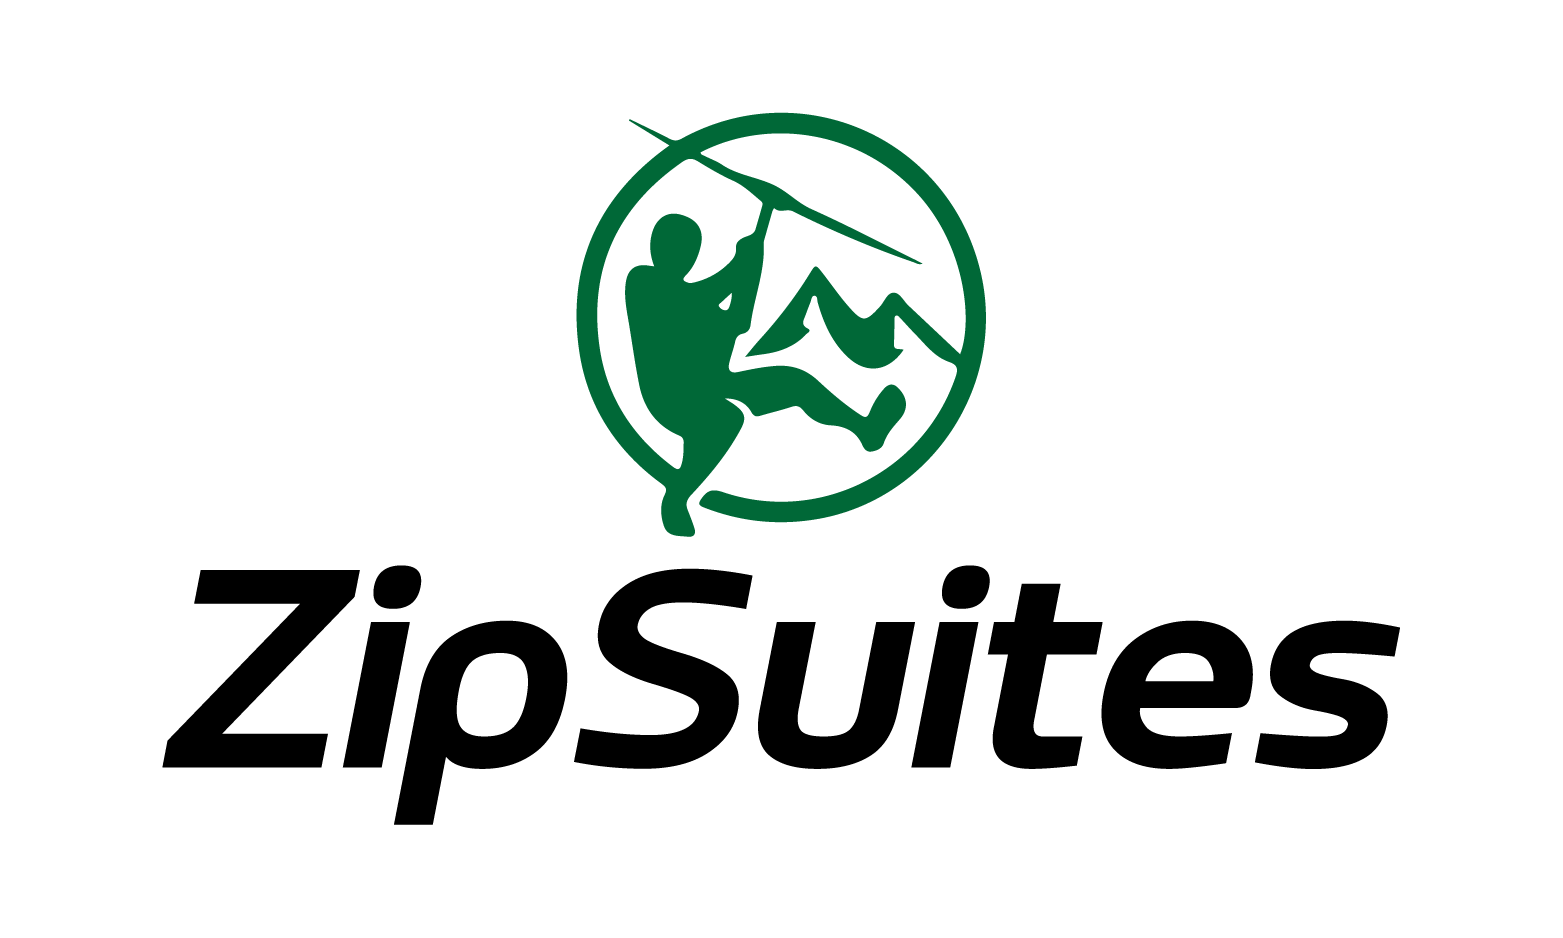 ZipSuites.com - Creative brandable domain for sale